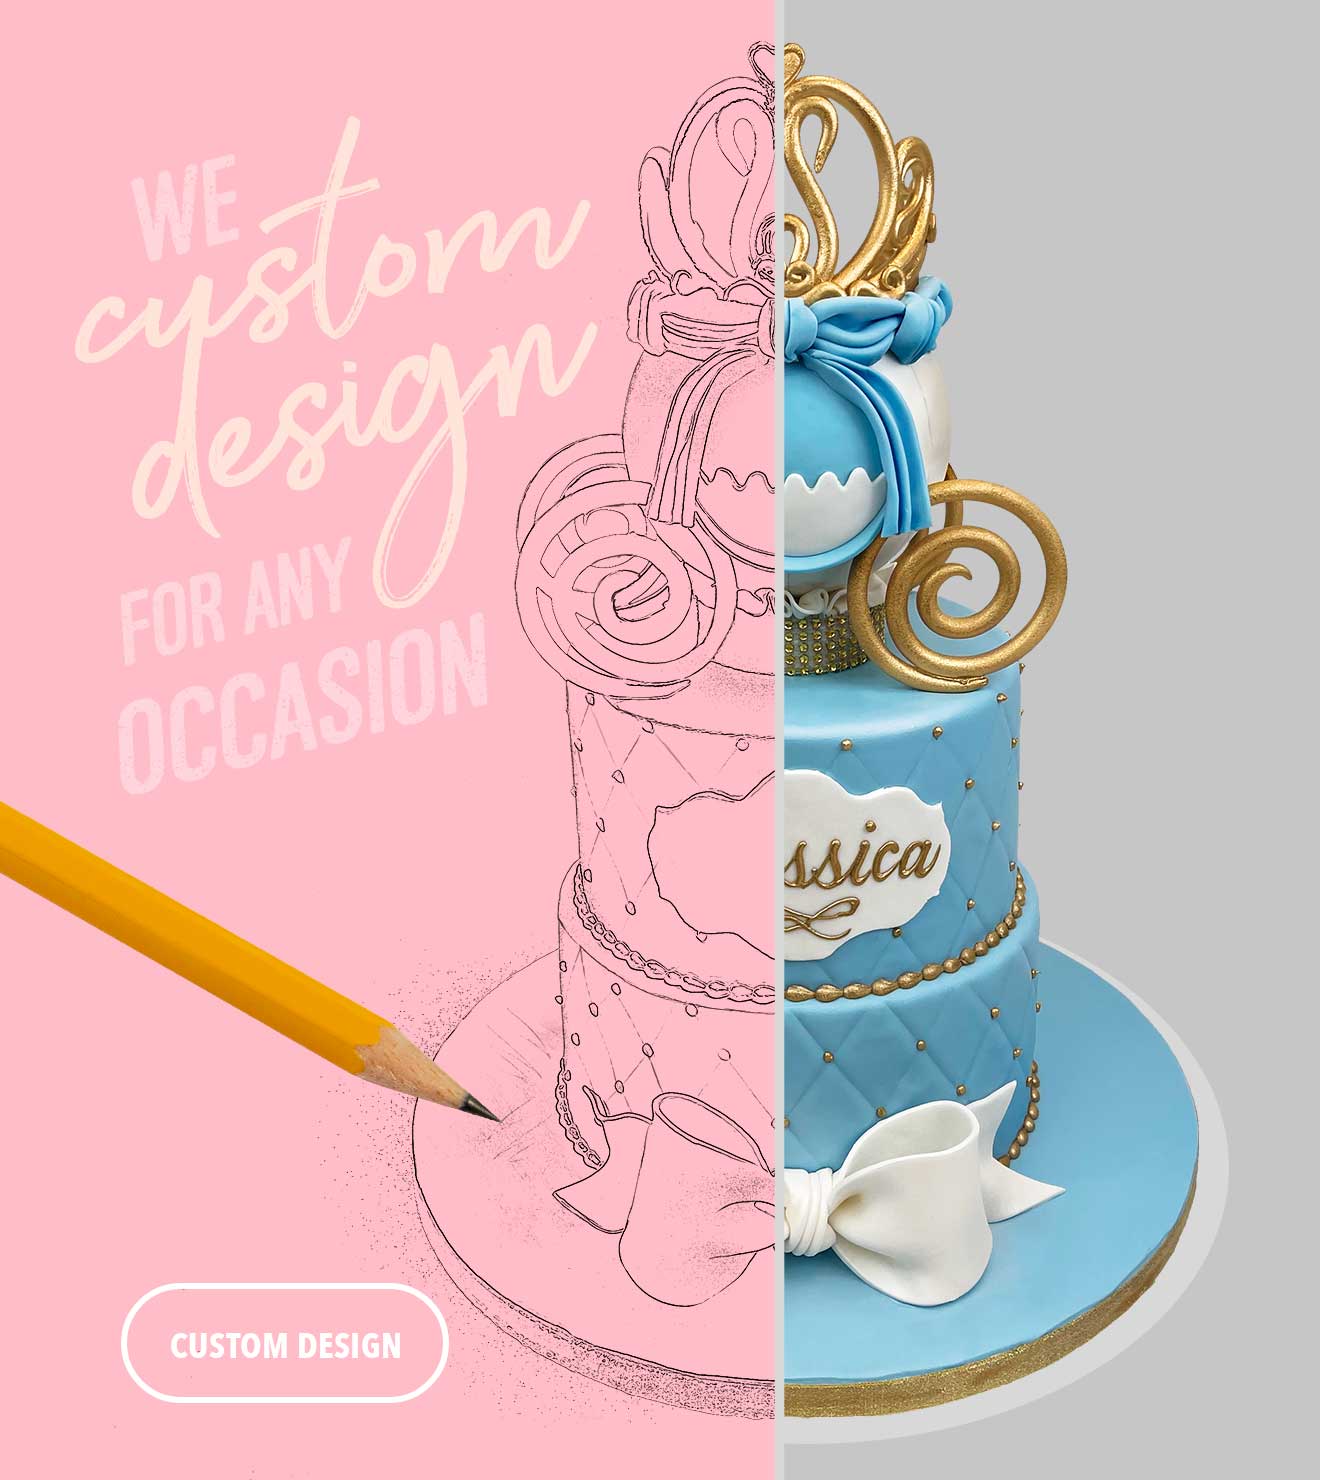 Custom Design link, press here